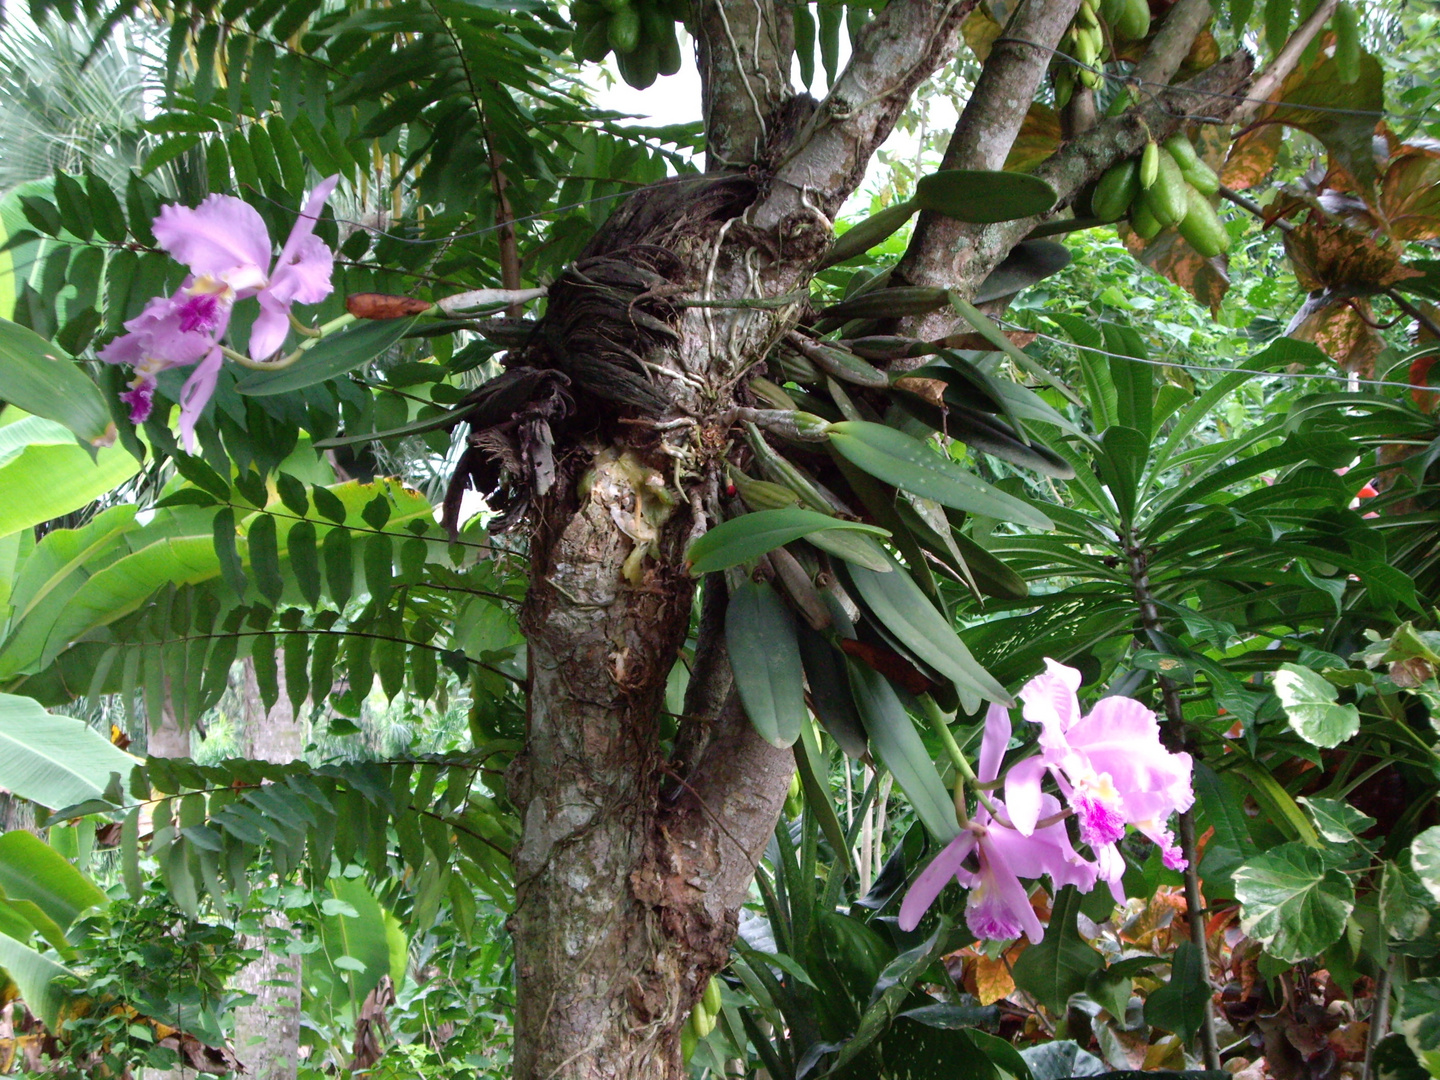 Baum orchidee